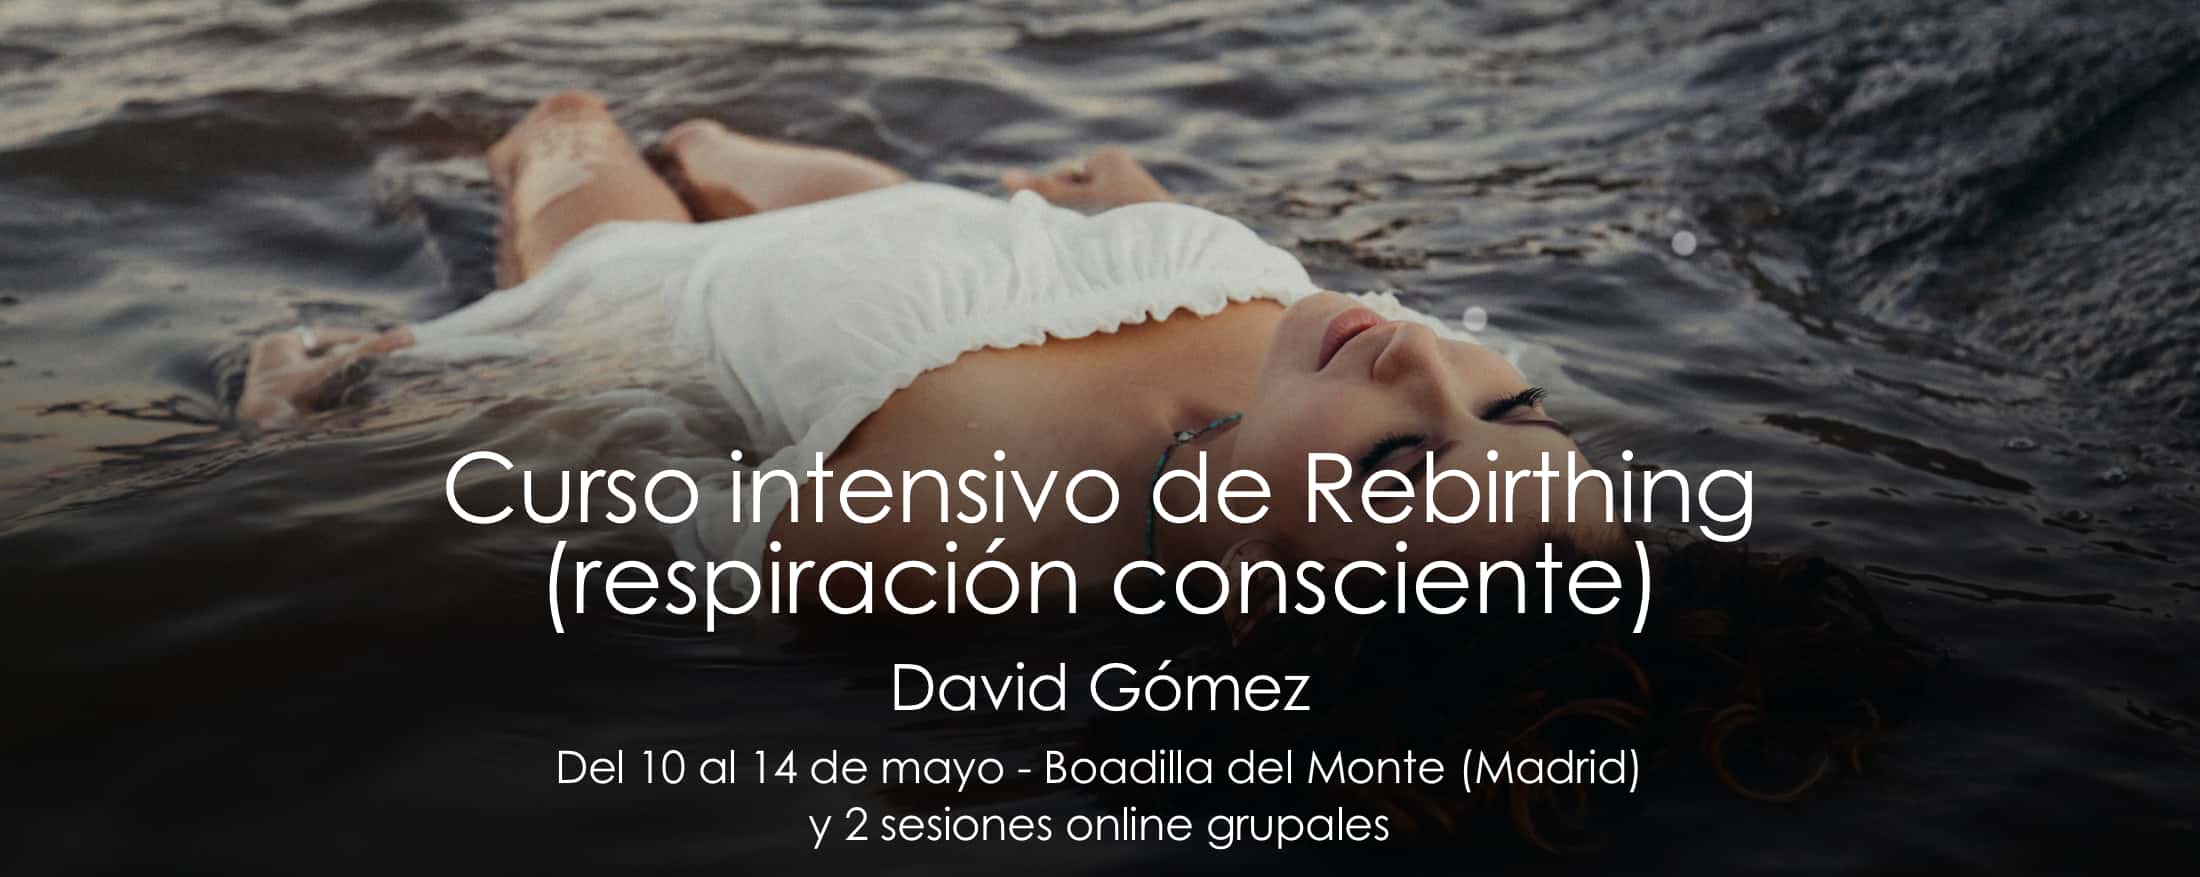 Banner-curso-rebirthing-mayo-24 David Gomez